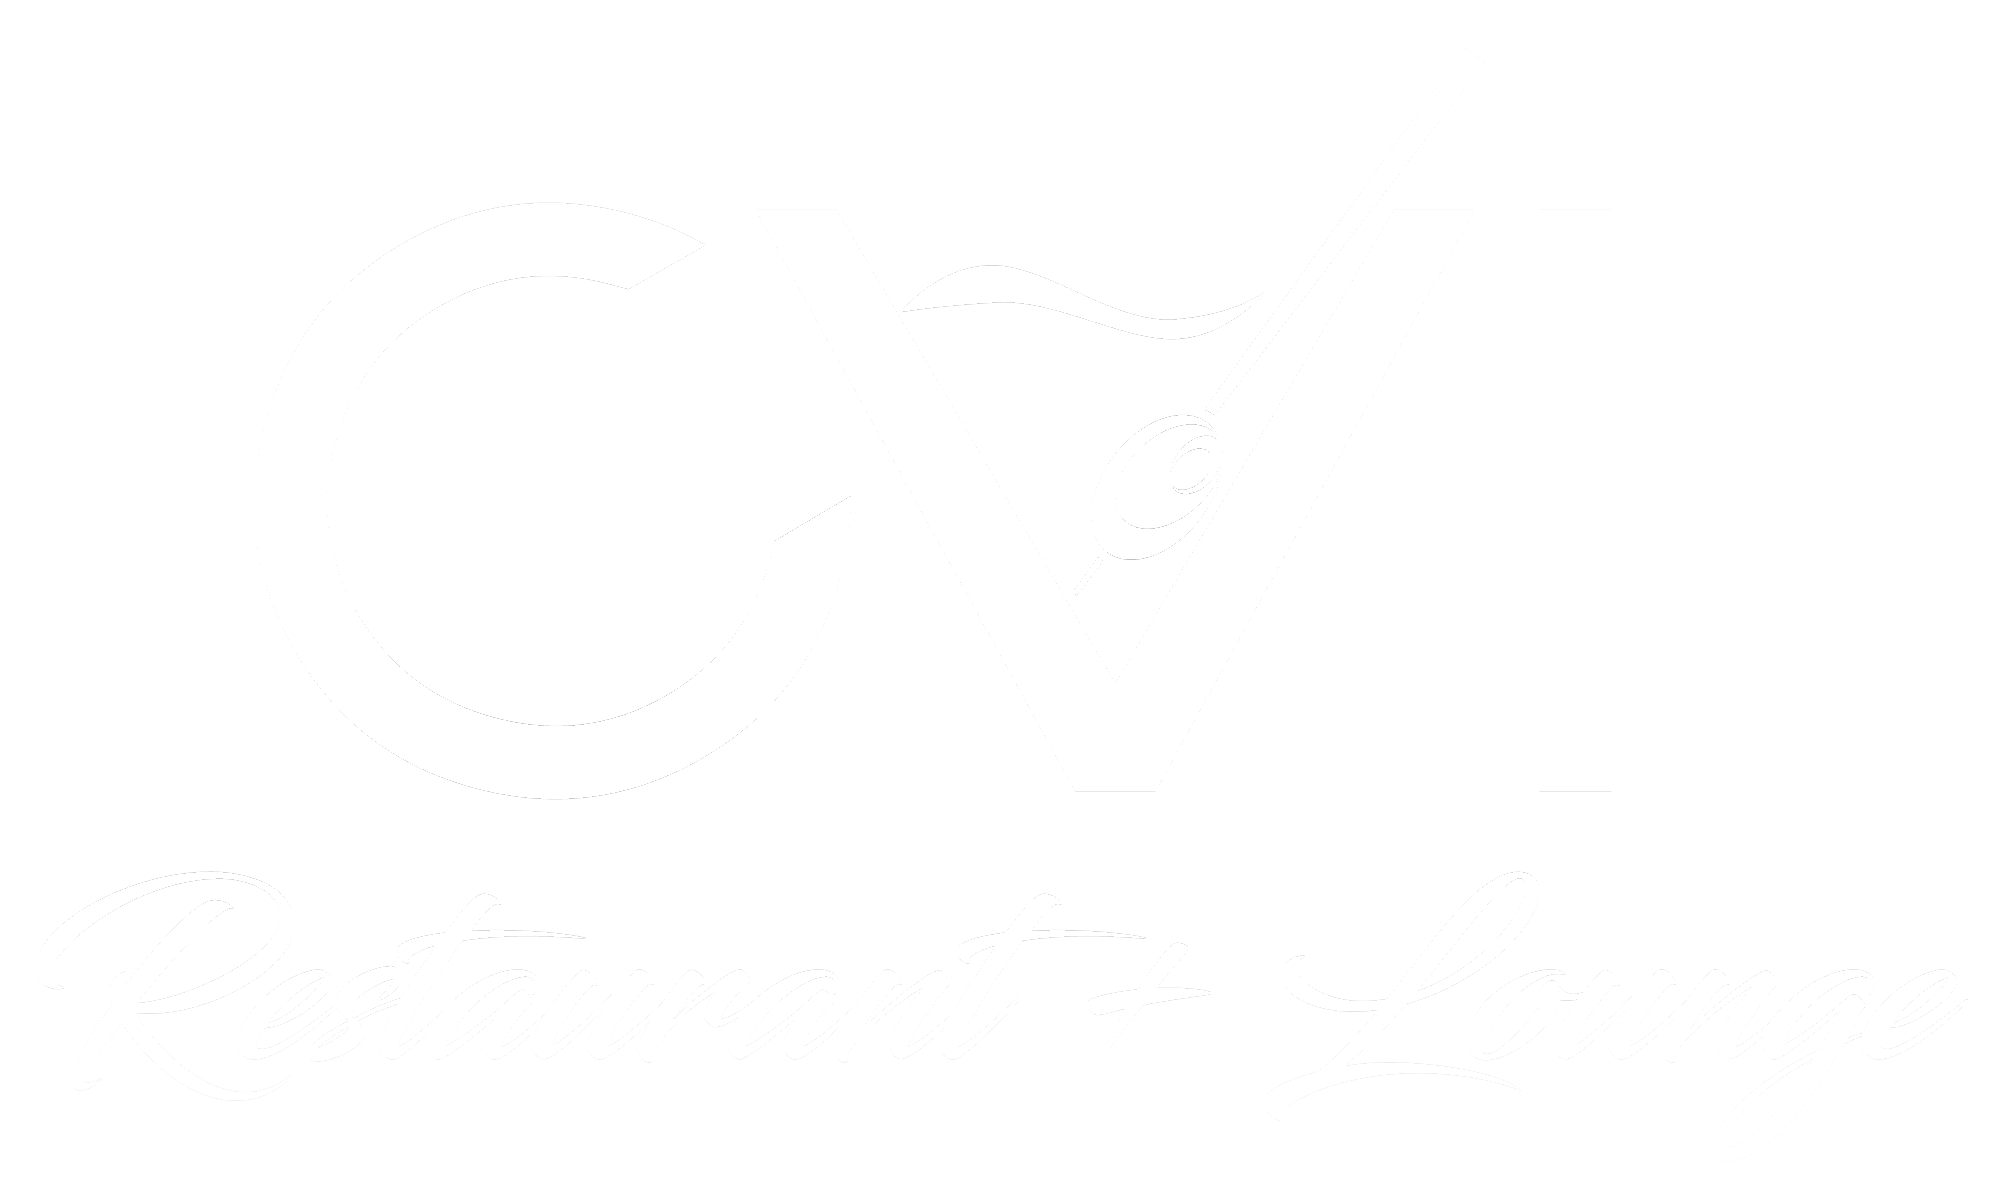 CVI Restaurant & Lounge